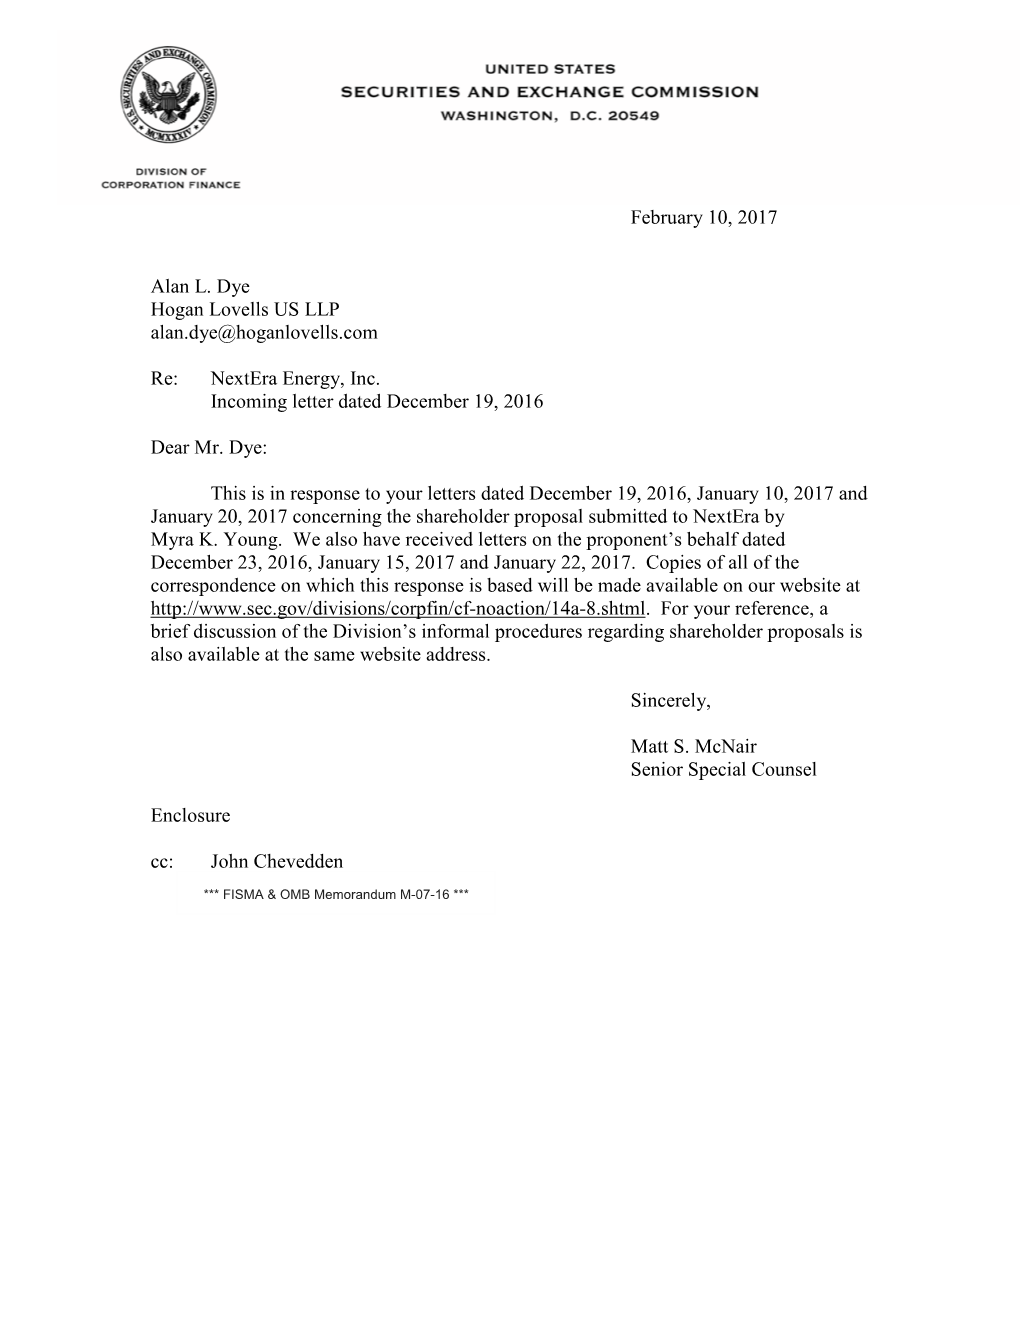 Nextera Energy, Inc.; Rule 14A-8 No-Action Letter